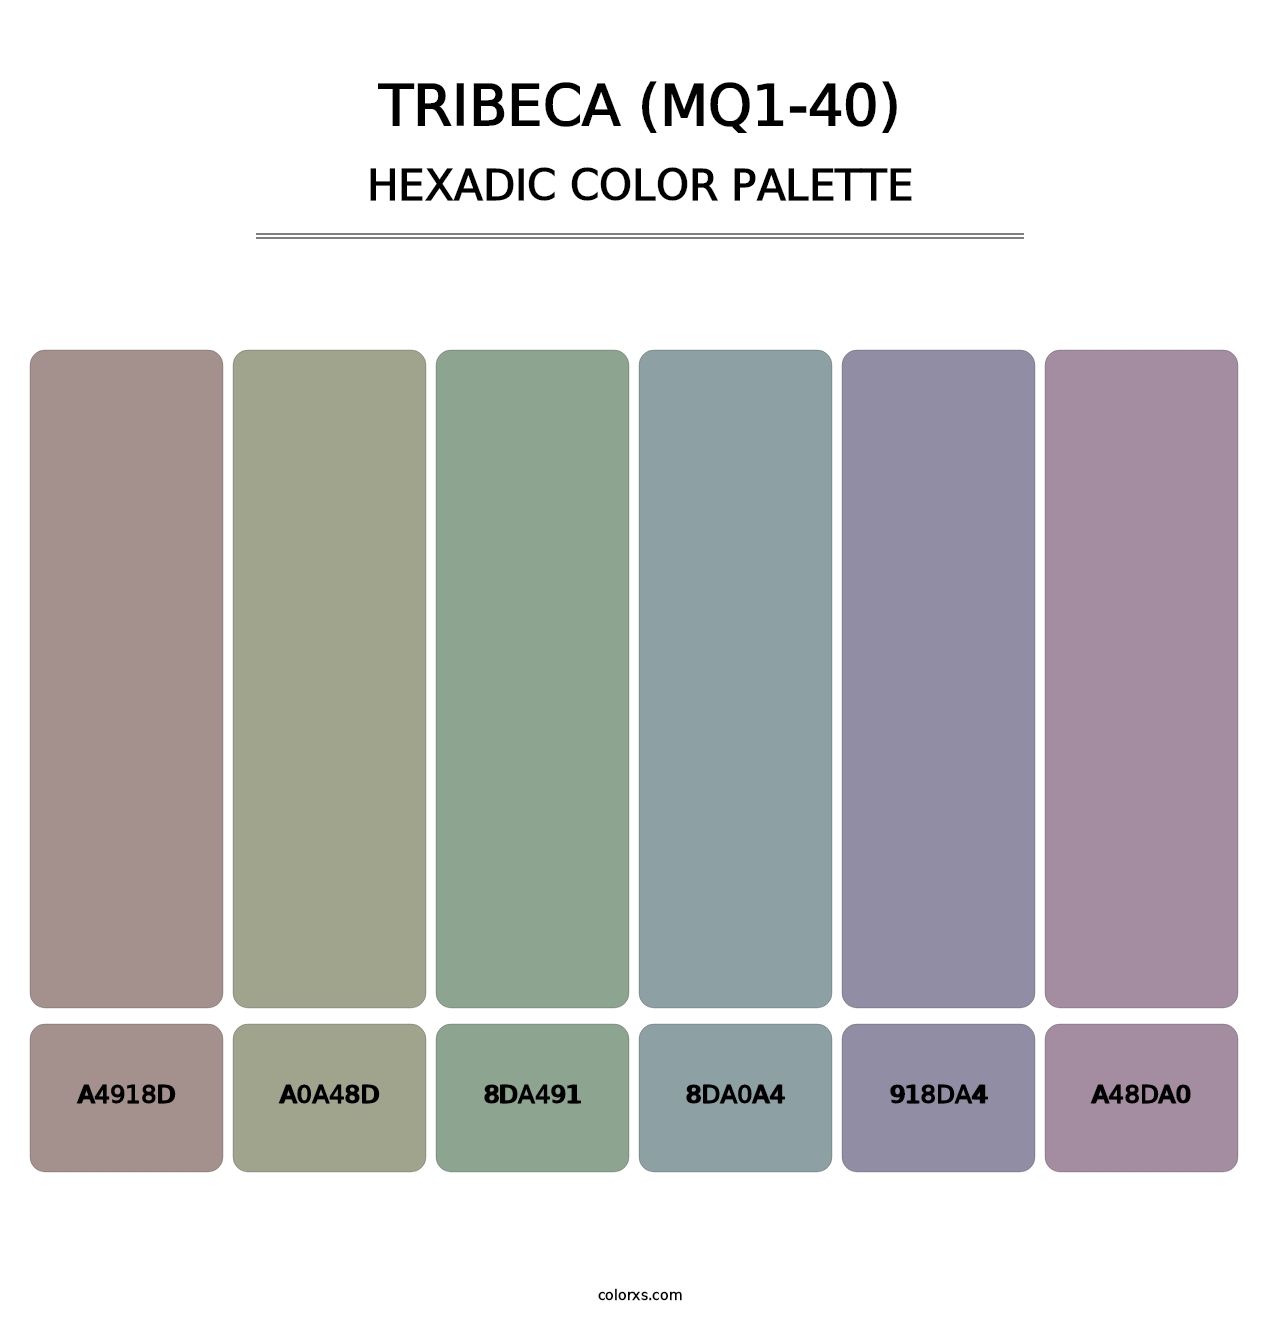 Tribeca (MQ1-40) - Hexadic Color Palette